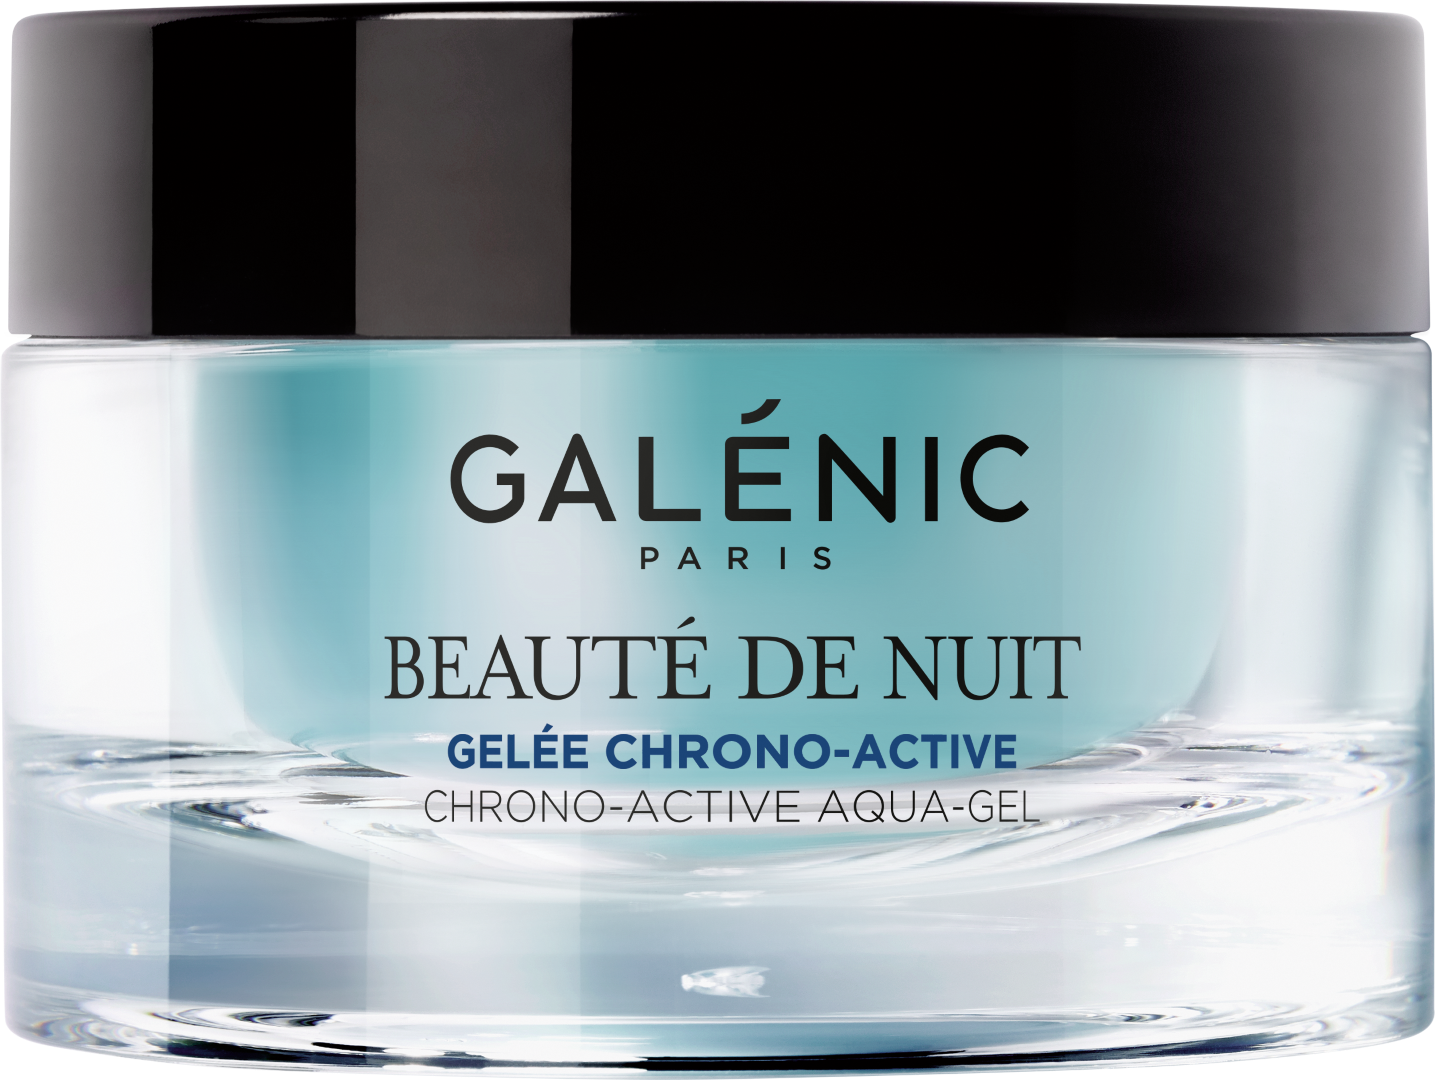 Galénic Beauté De Nuit Aqua-Gel Crono-Activo 50ml